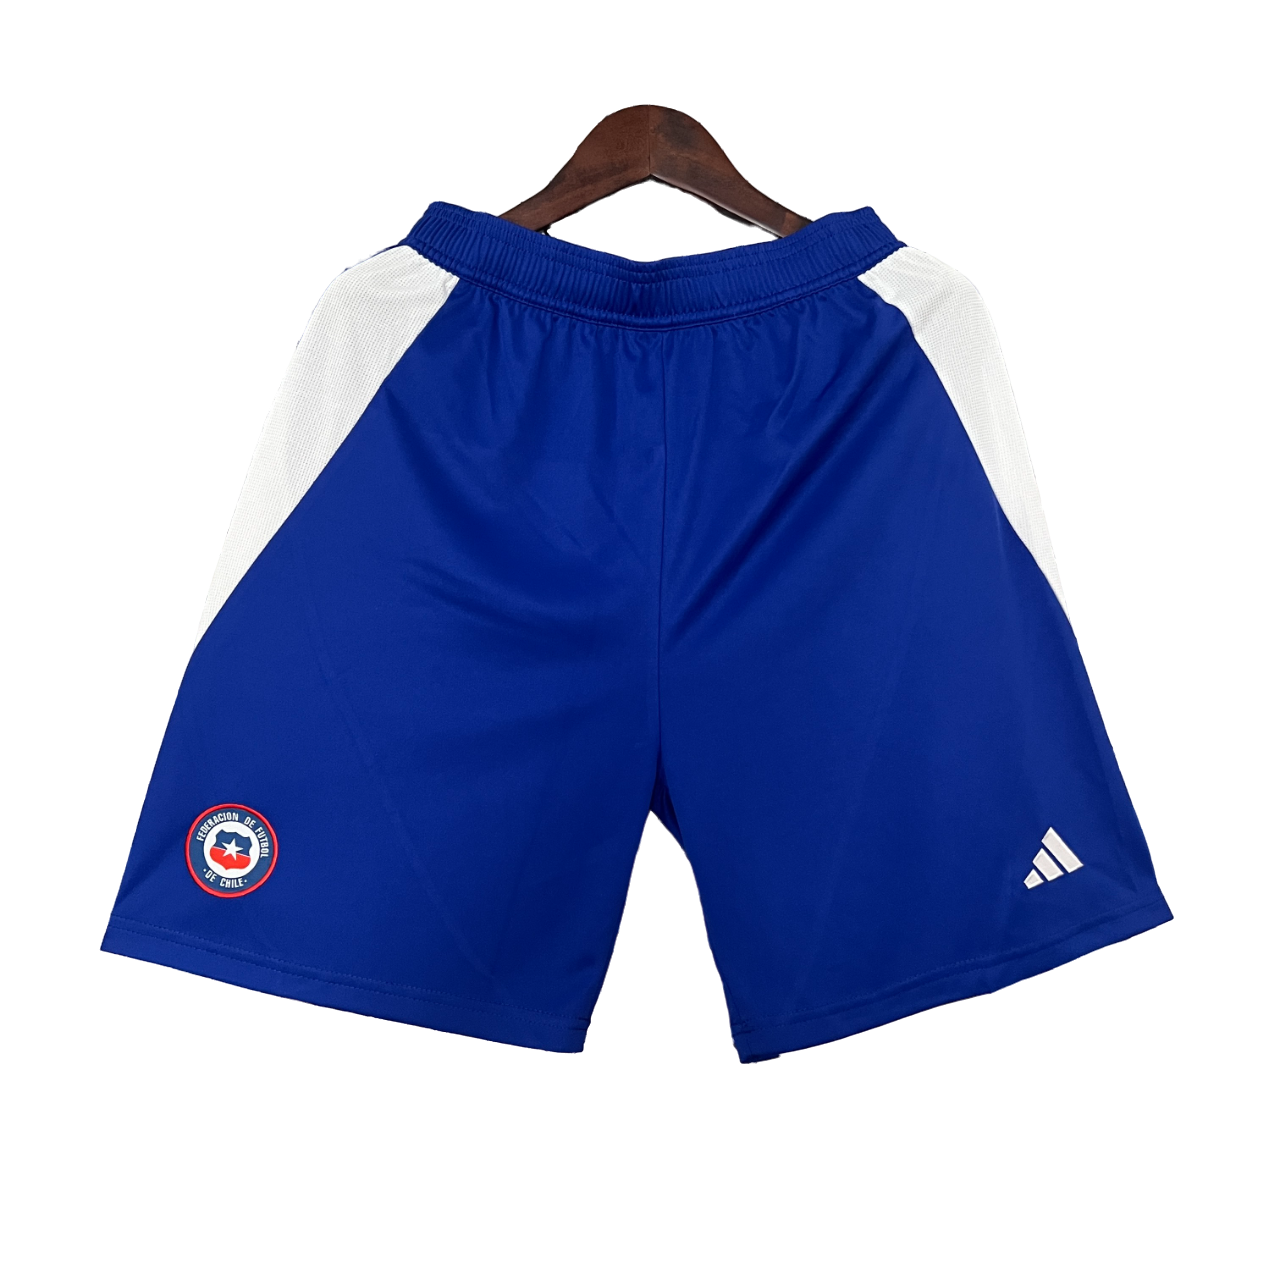 Cile - 24/25 Shorts